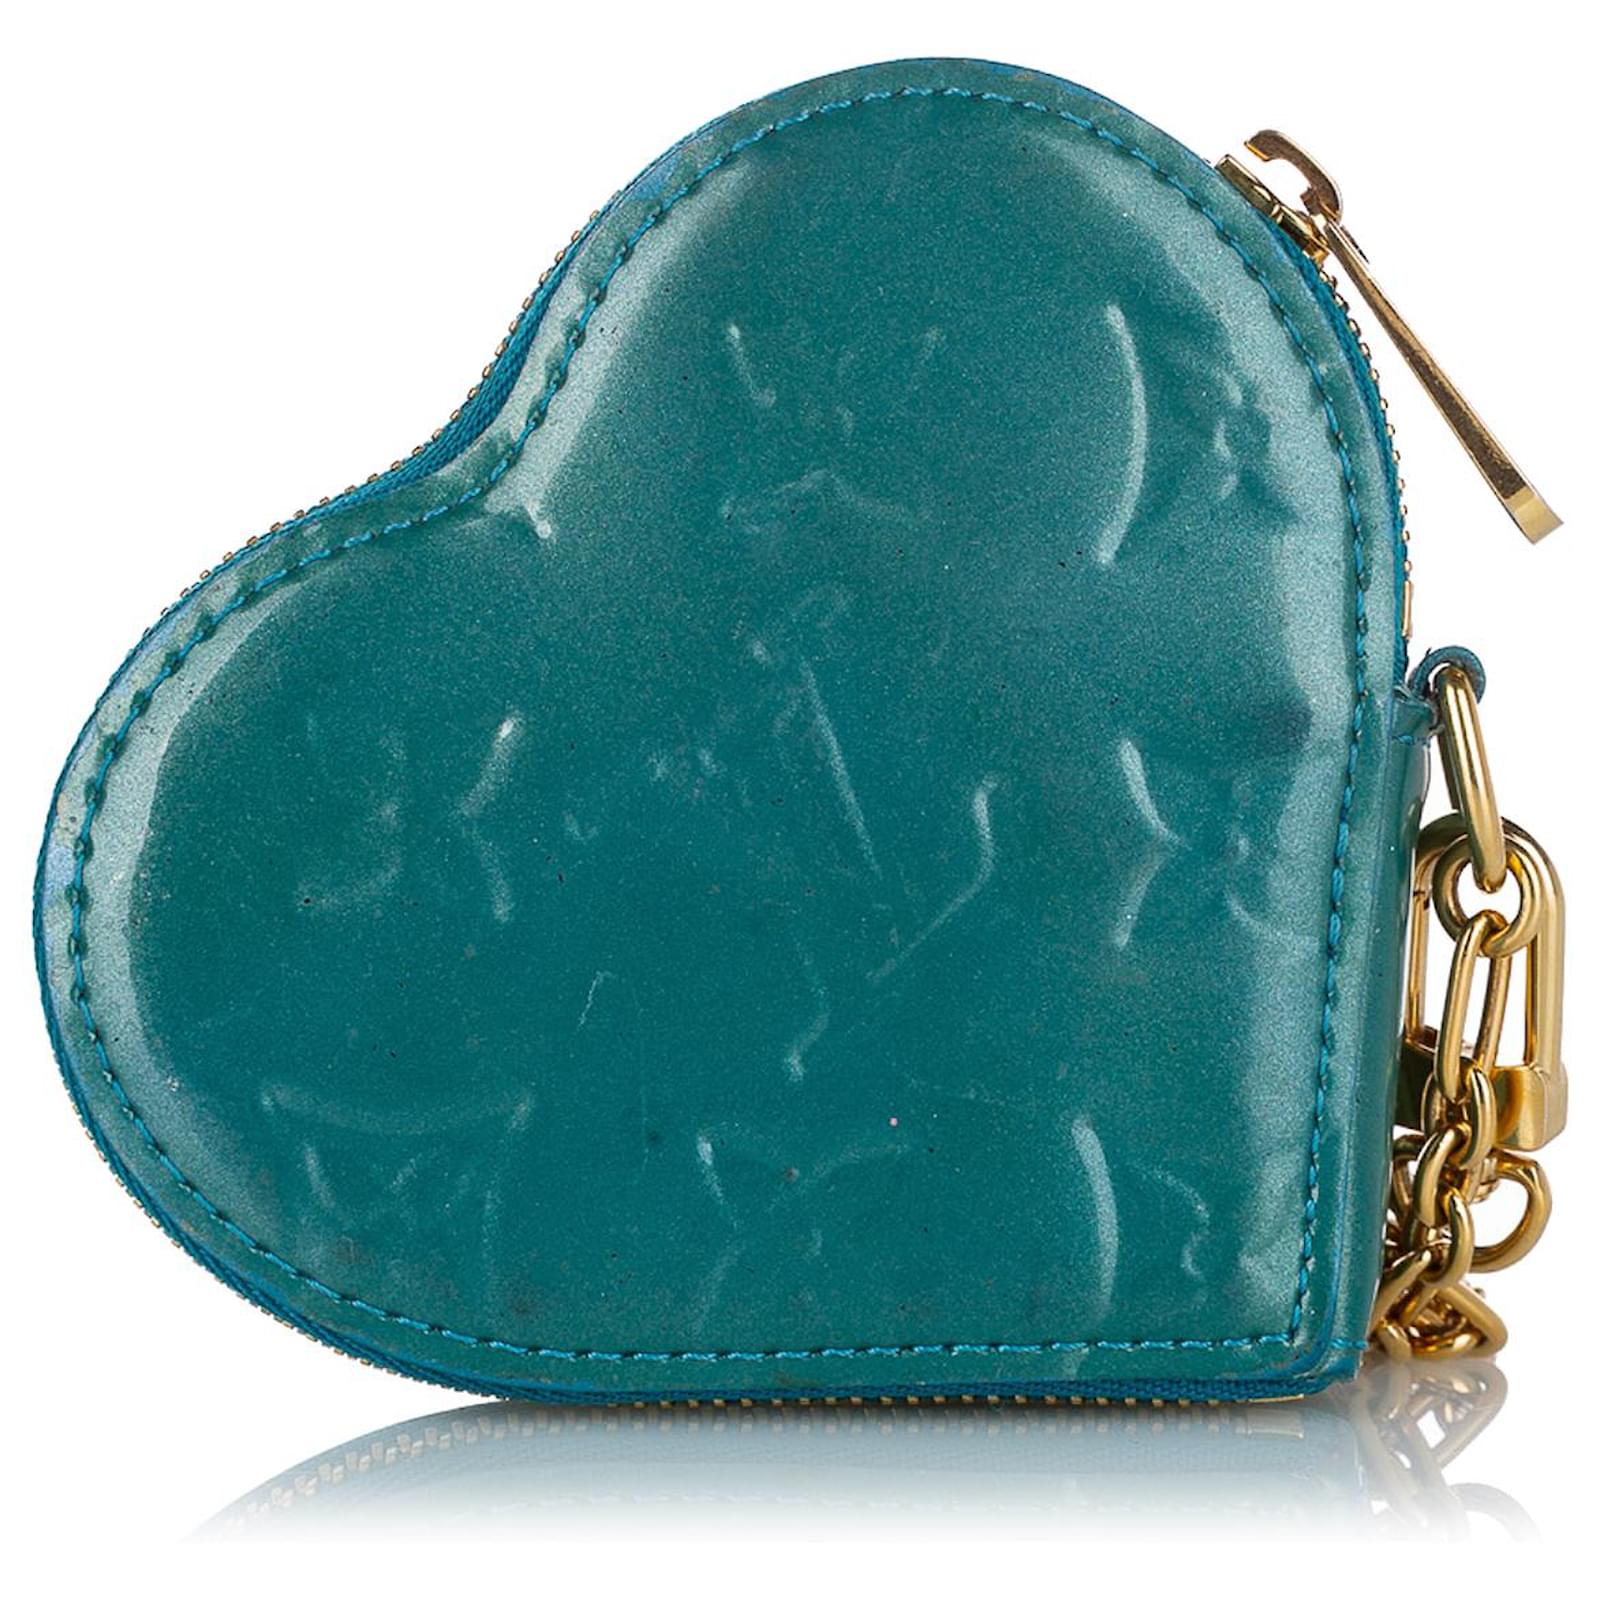 Louis Vuitton Blue Monogram Vernis Heart Coin Purse Light blue